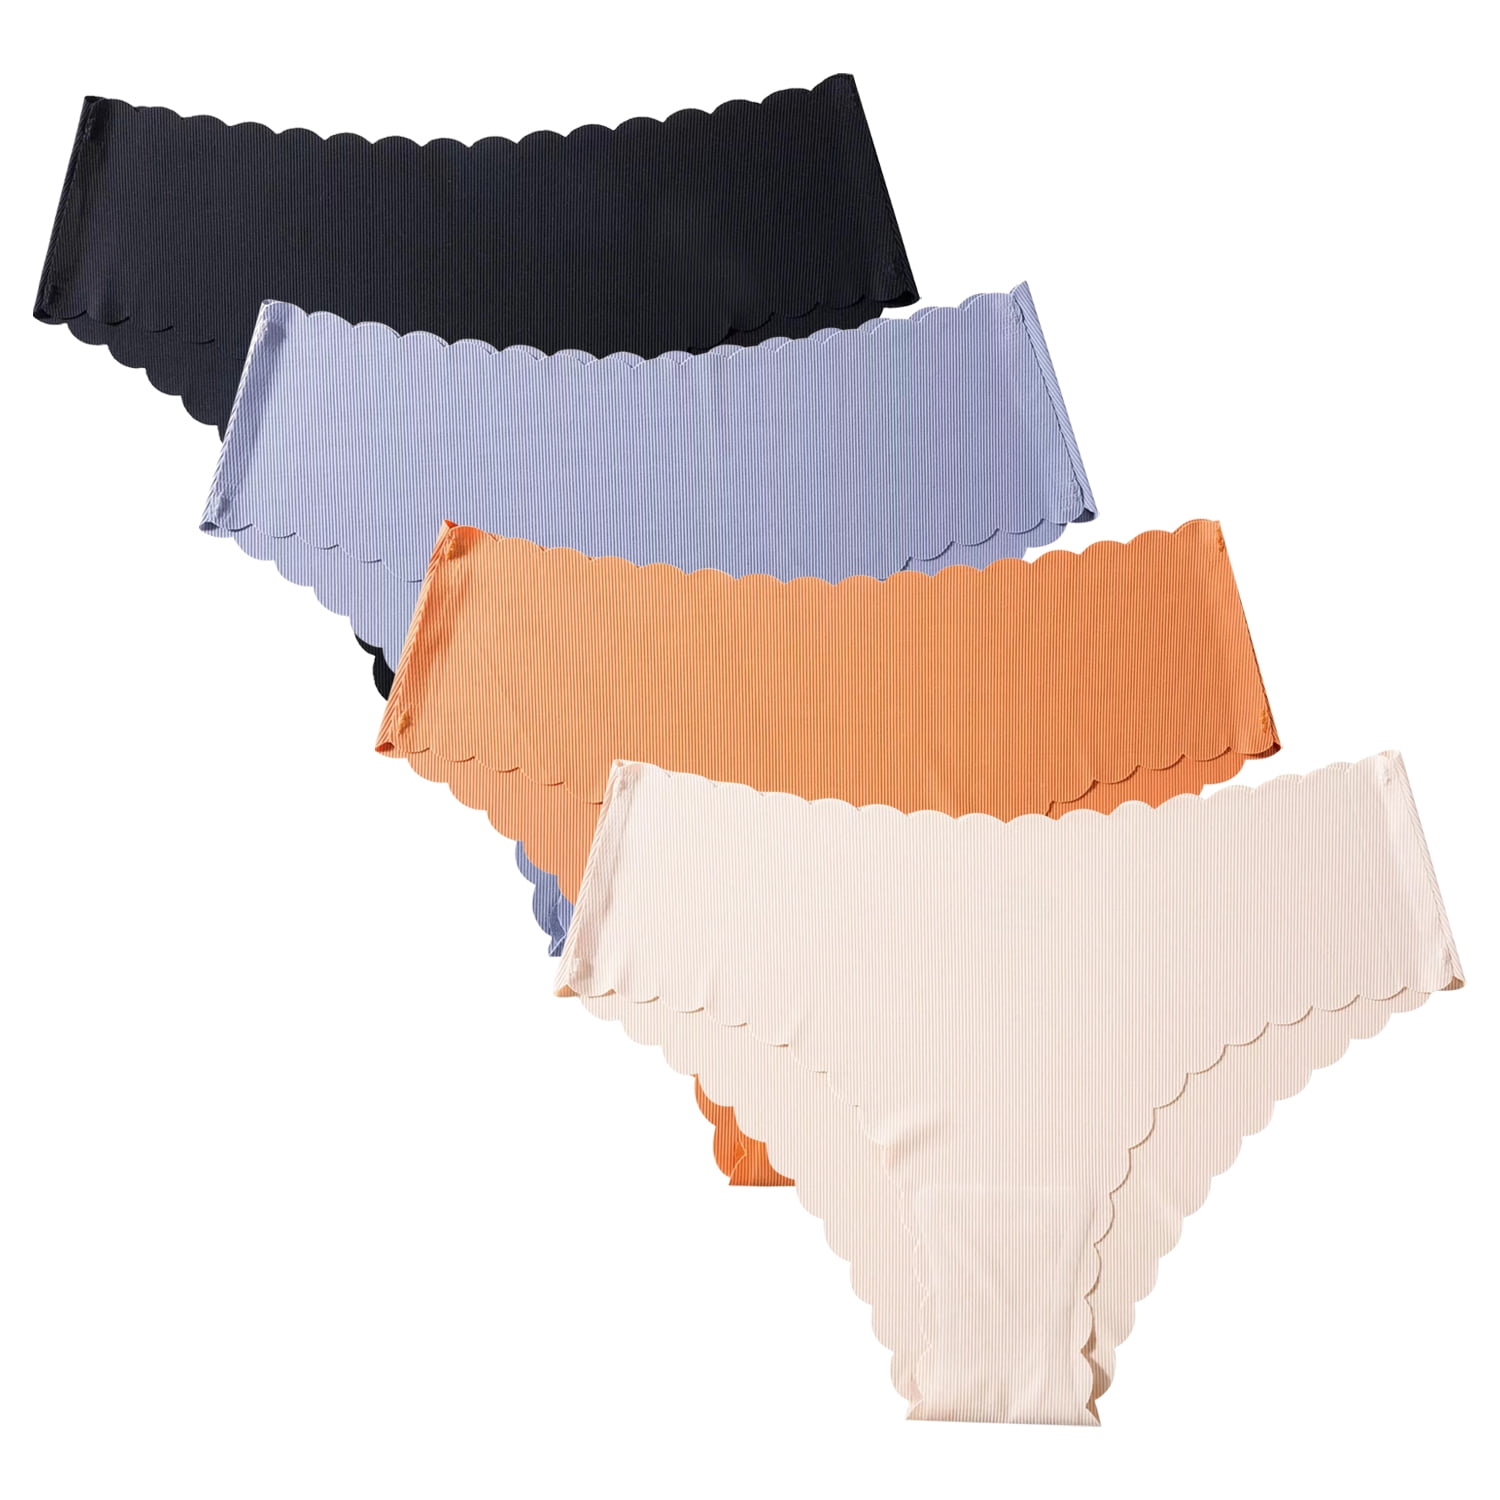 Charmo Women Nylon Panties Mid Rise Briefs Ladies Underwear Stretch Hipster  Panties,4 Pack 